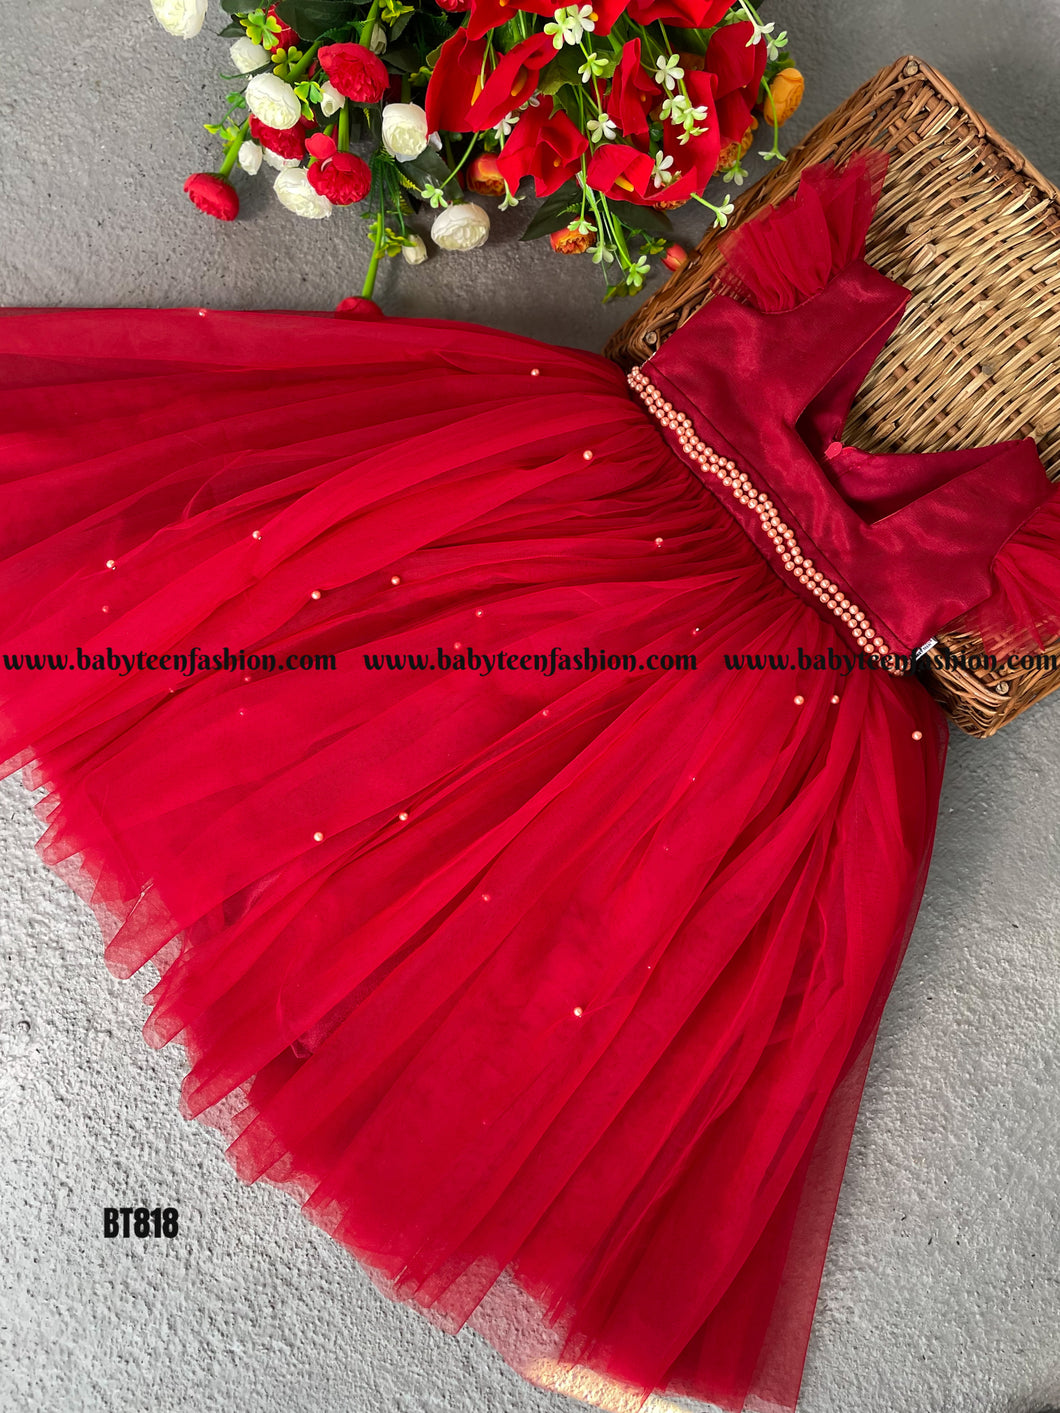 BT818 Crimson Charm – Luxe Festive Gown for Petite Fashionistas